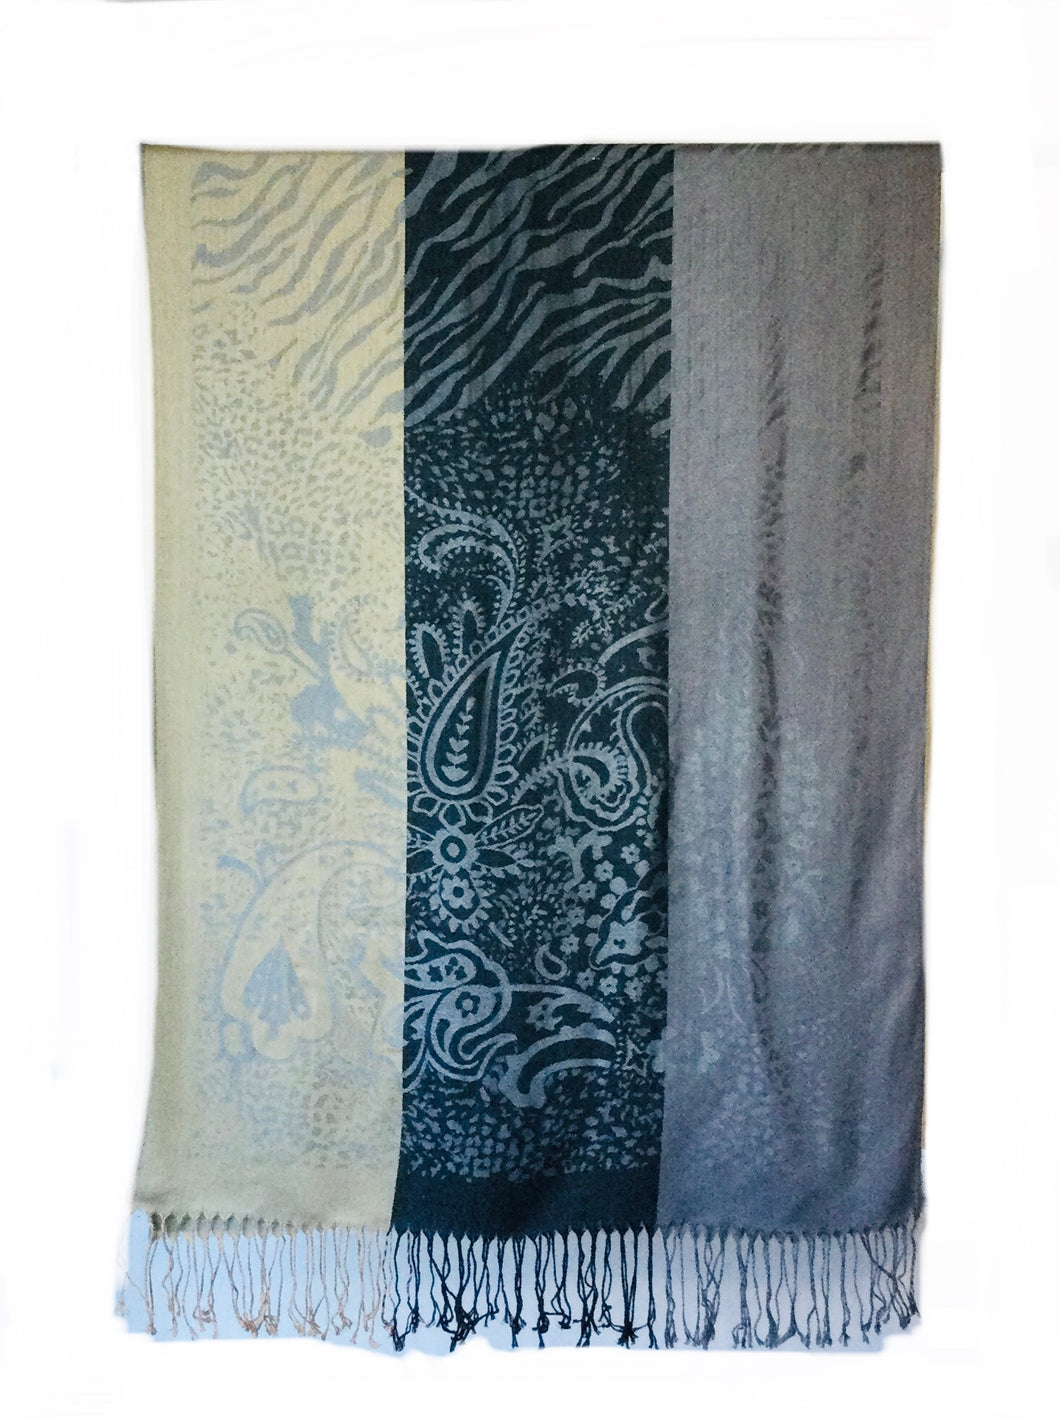 Pashmina colour block paisley / Animal print scarf